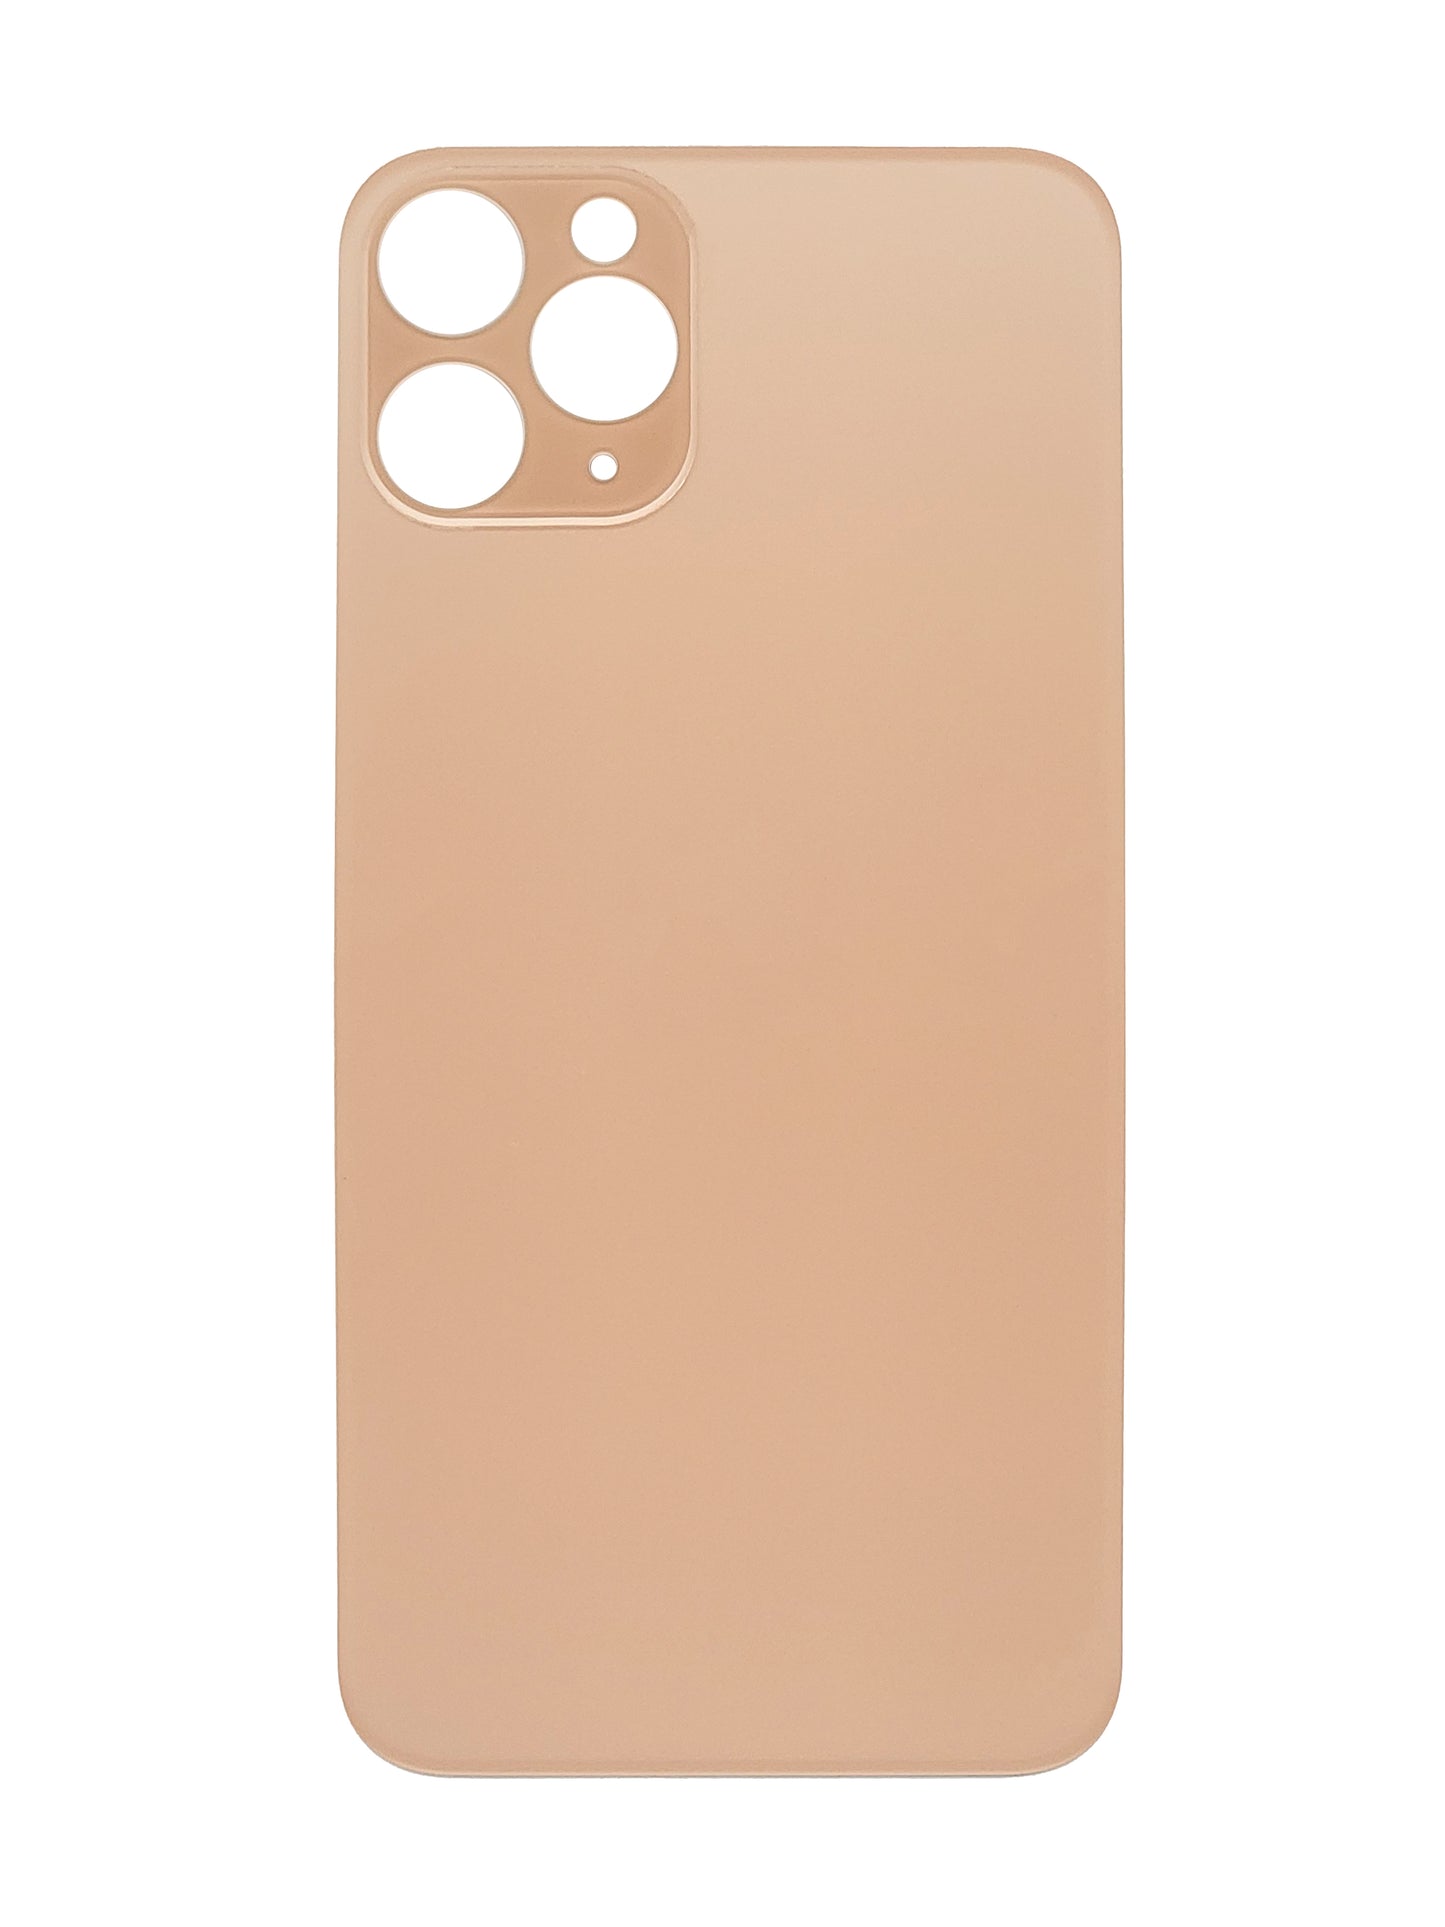 iPhone 11 Pro Back Glass (No Logo) (Gold)